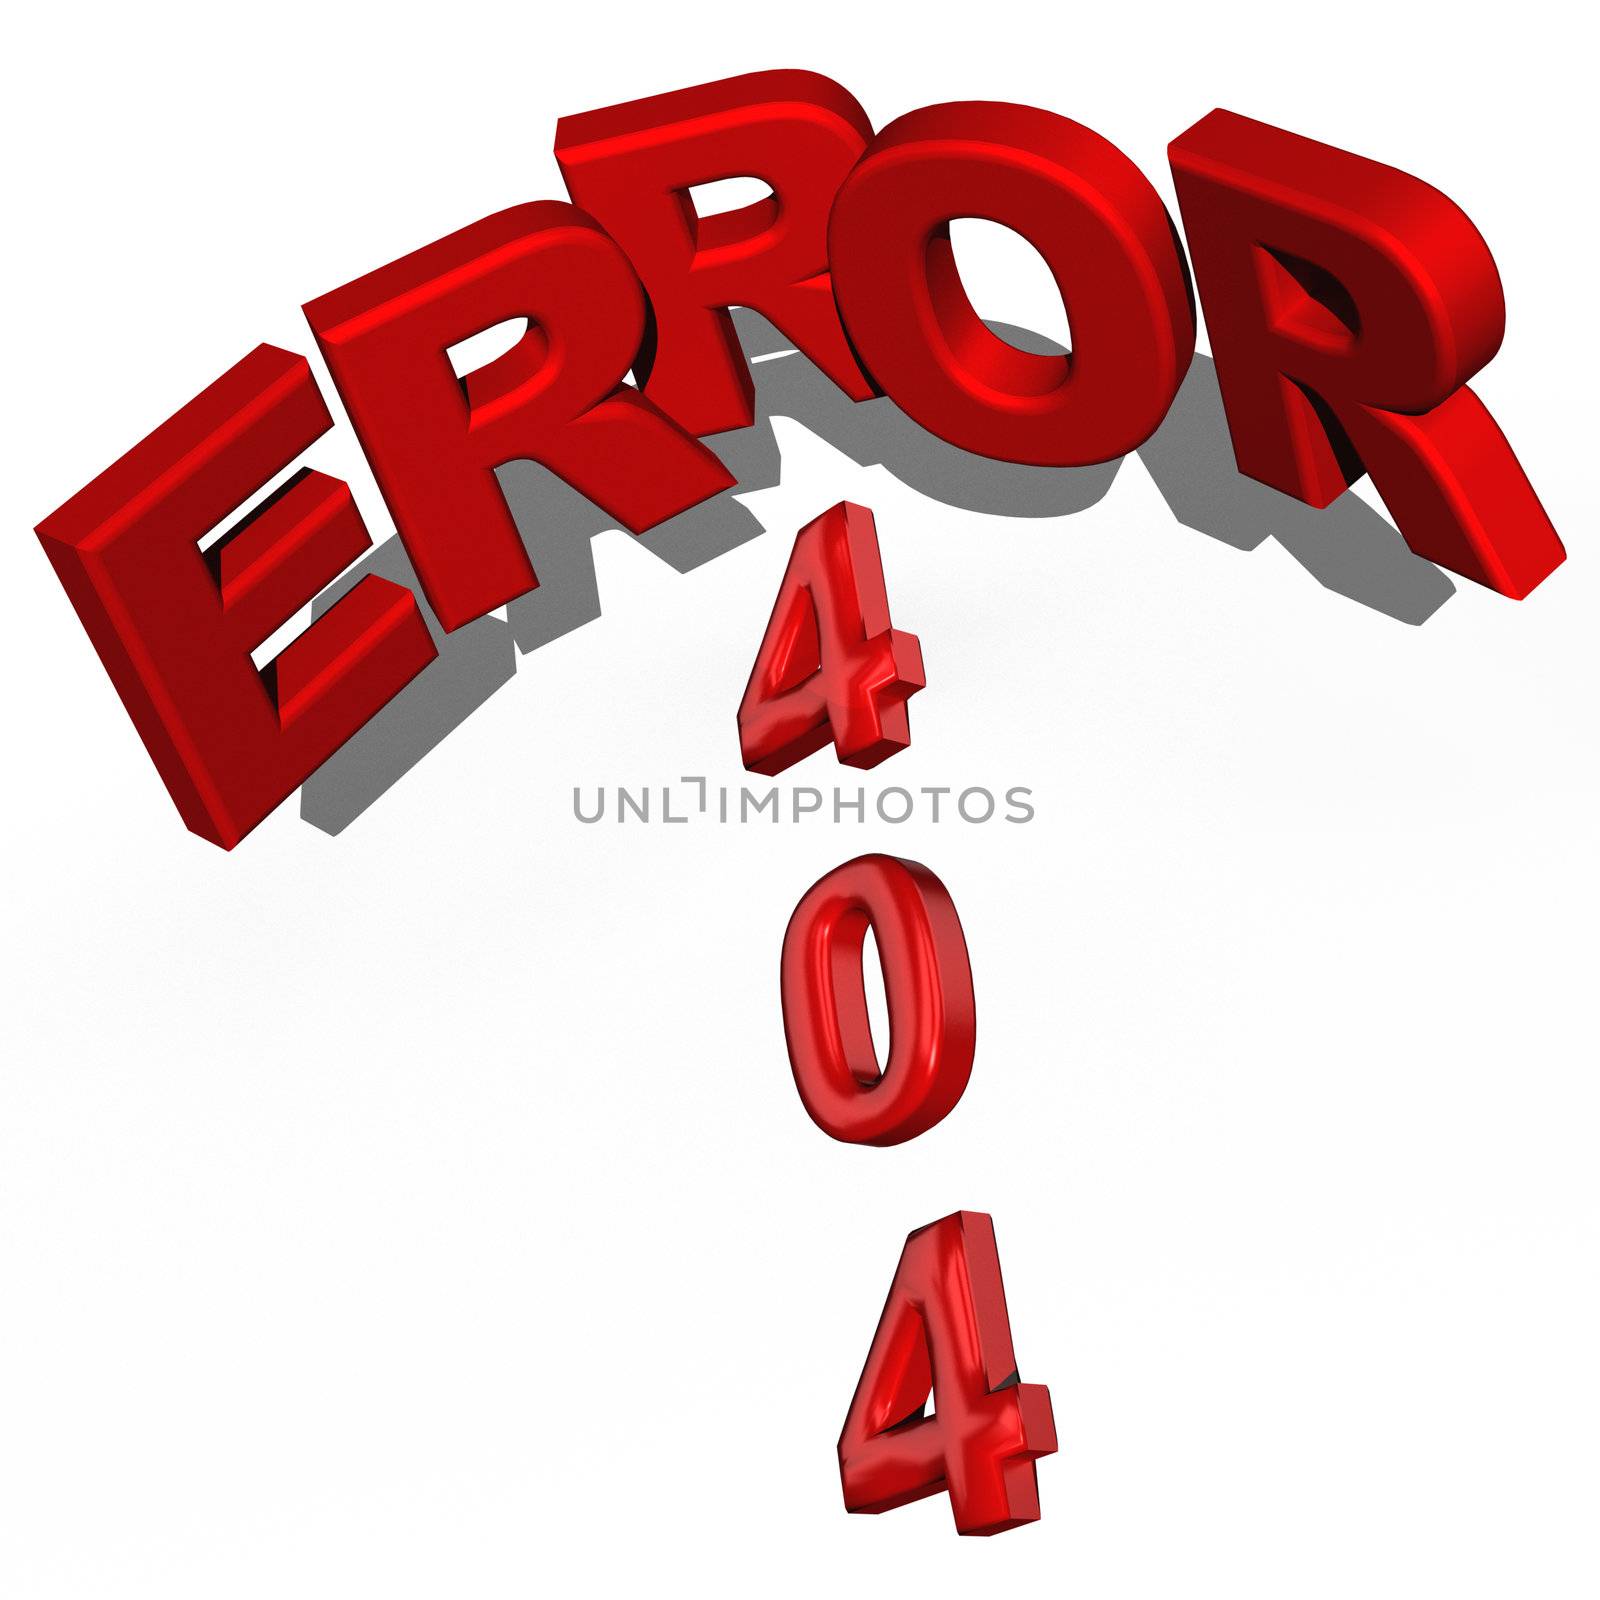 Three-dimensional inscription error 404 by richter1910